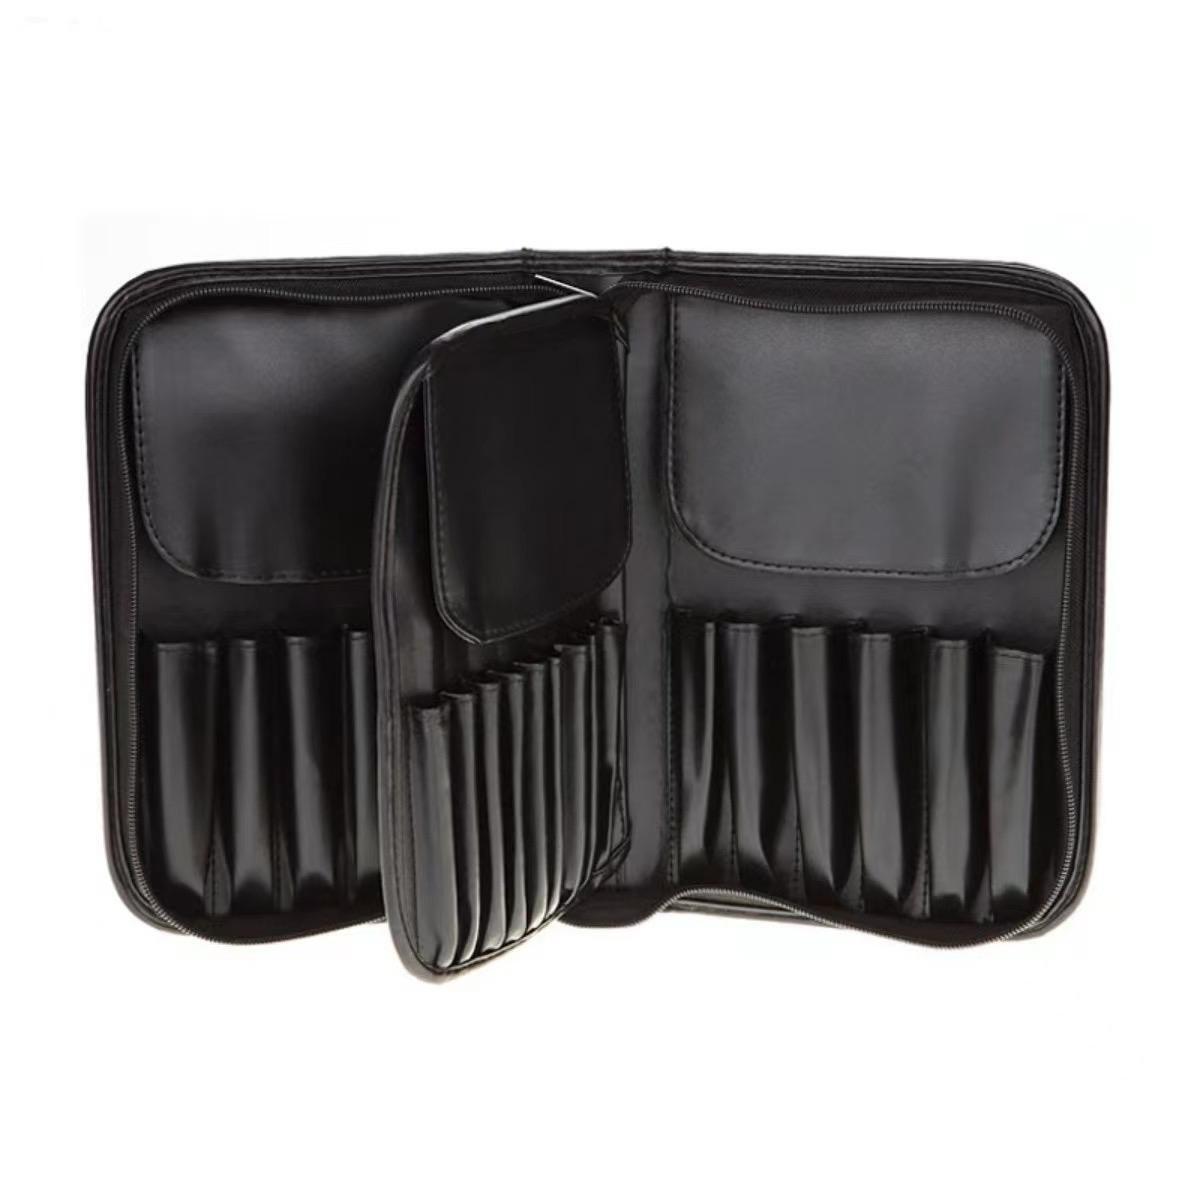 Bronson Professional | Bronson Professional Makeup Brush Handbag Multi Compartment Organizer Storage Case - Black